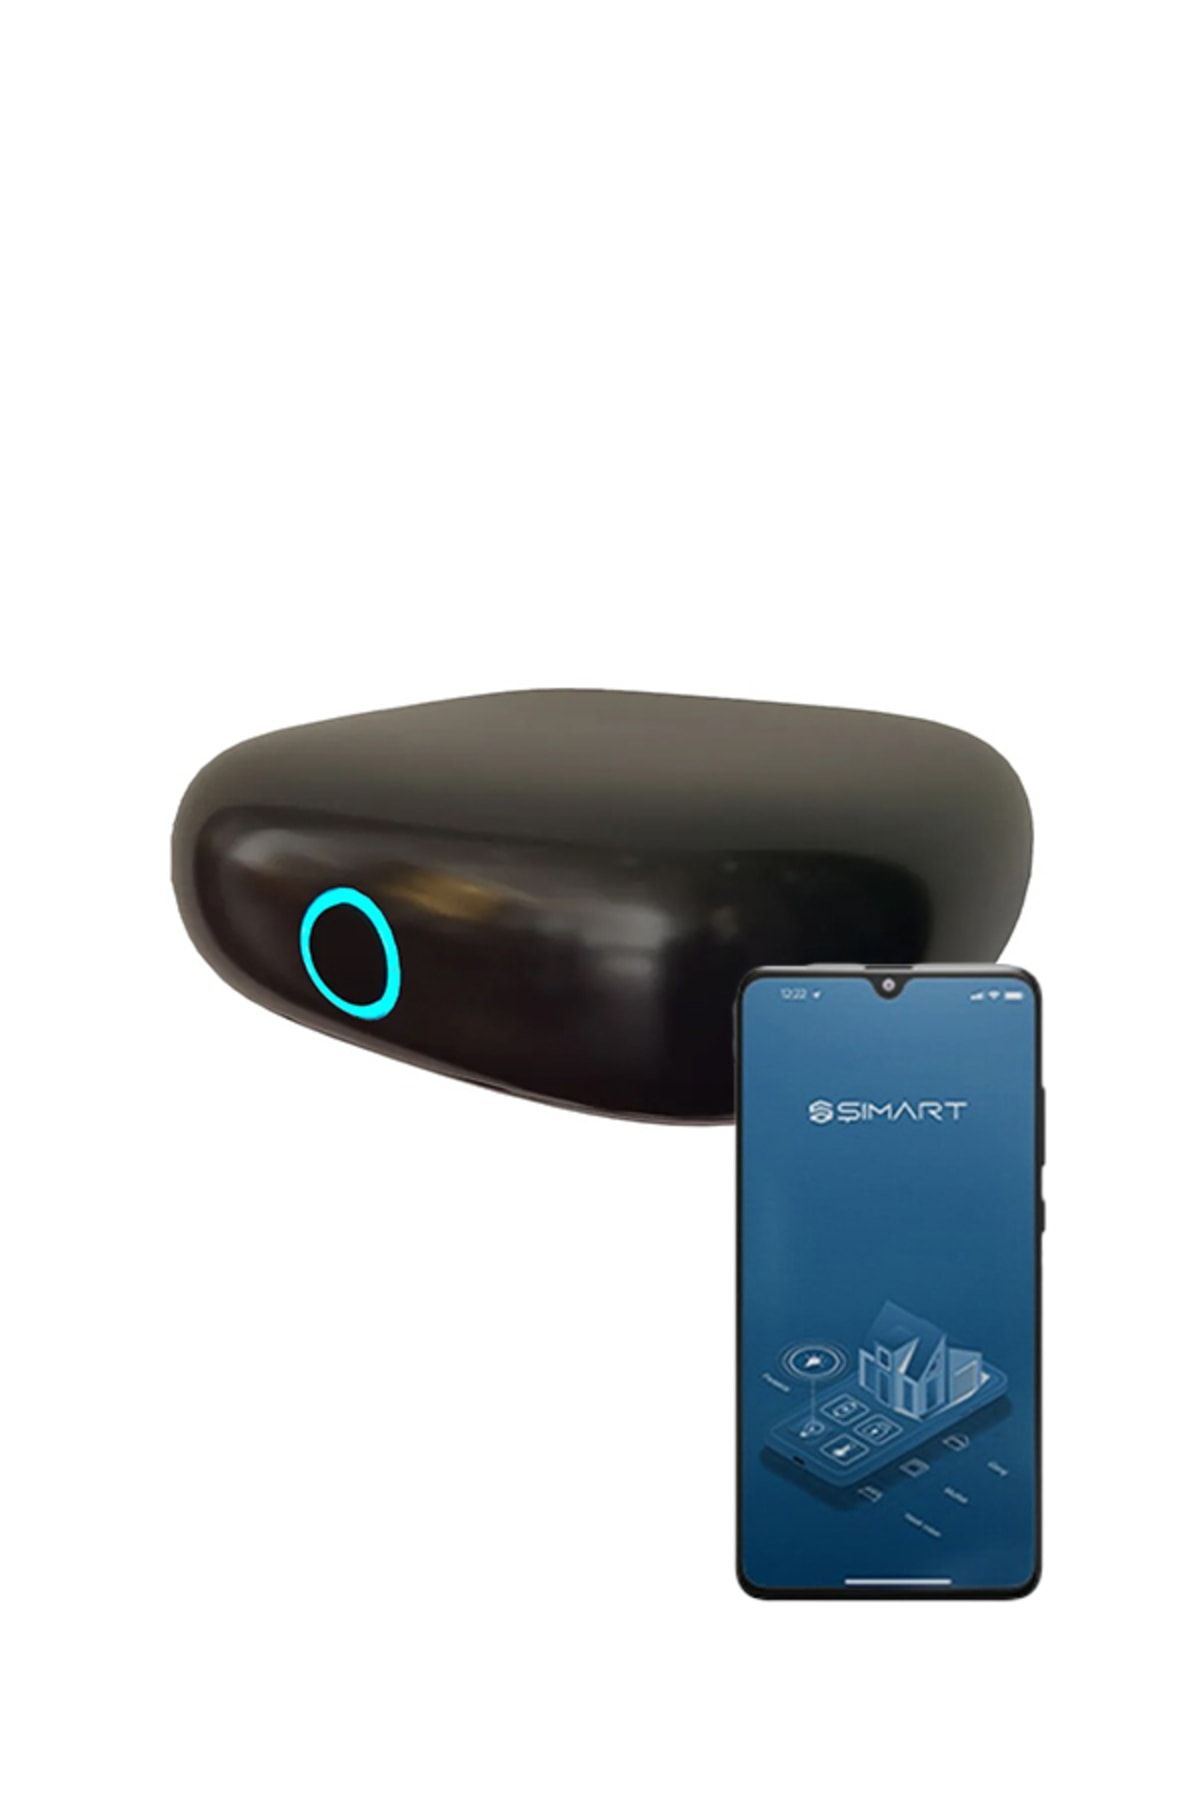 Şımart Teknoloji Şımart Bluetooth Ağ Geçidi: Gateway